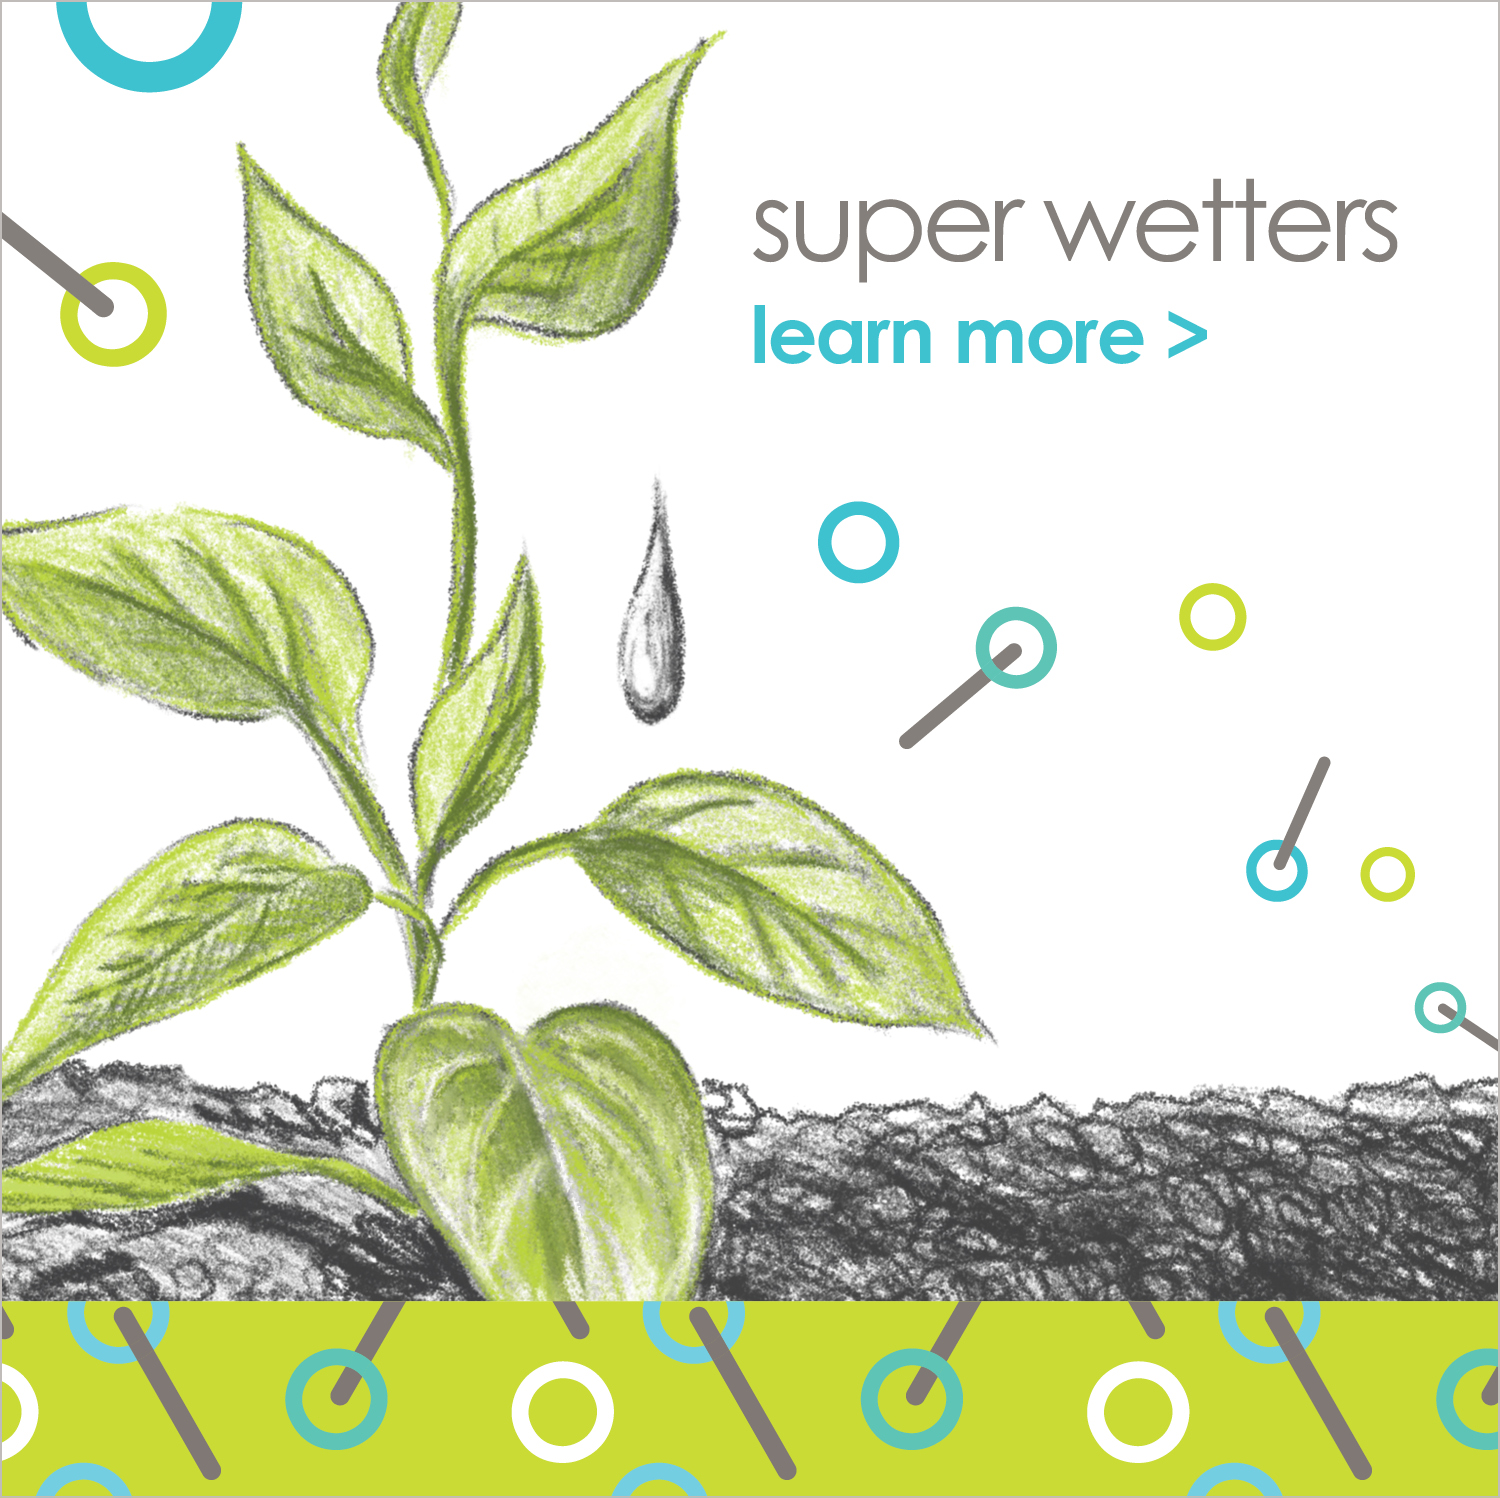 super-wetters-callout.jpg